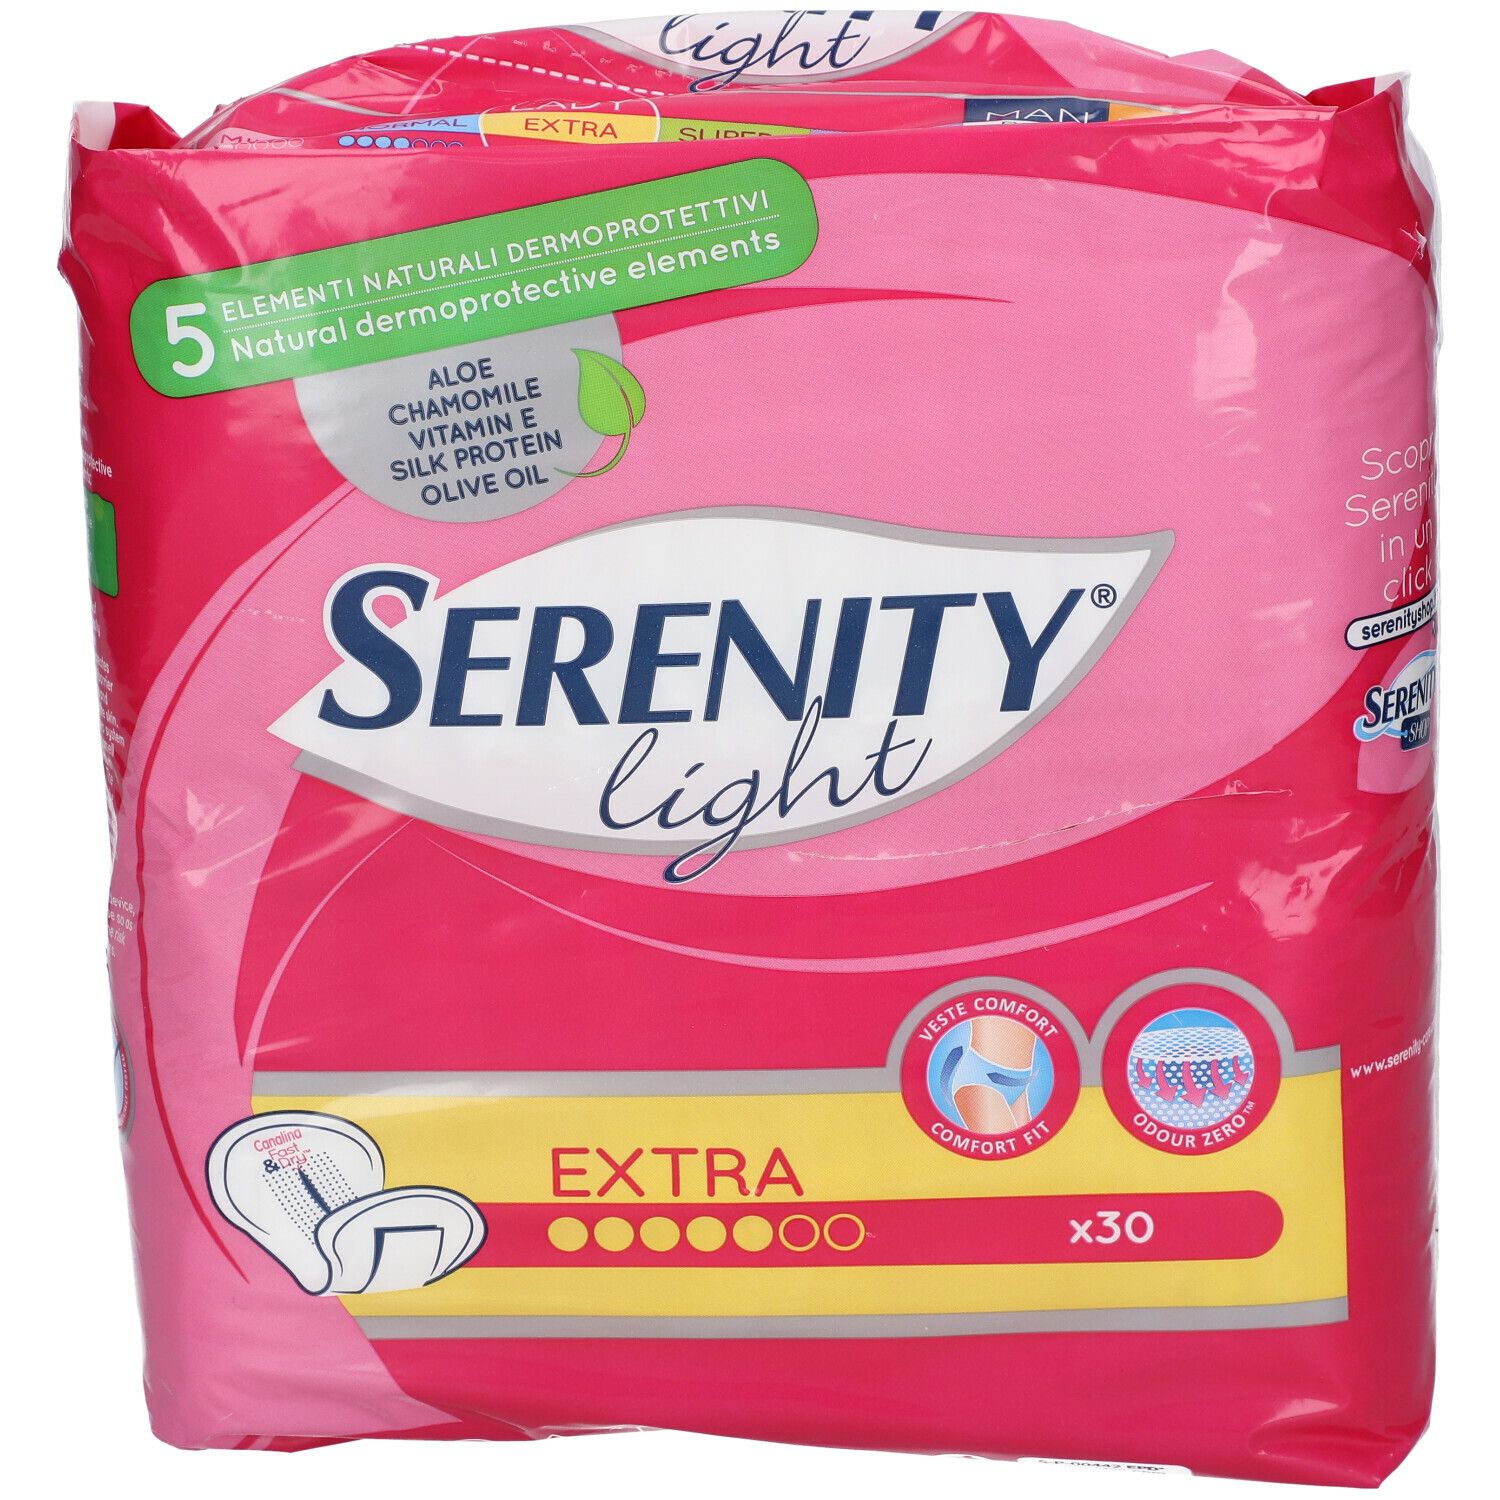 Serenity® Light Lady Extra